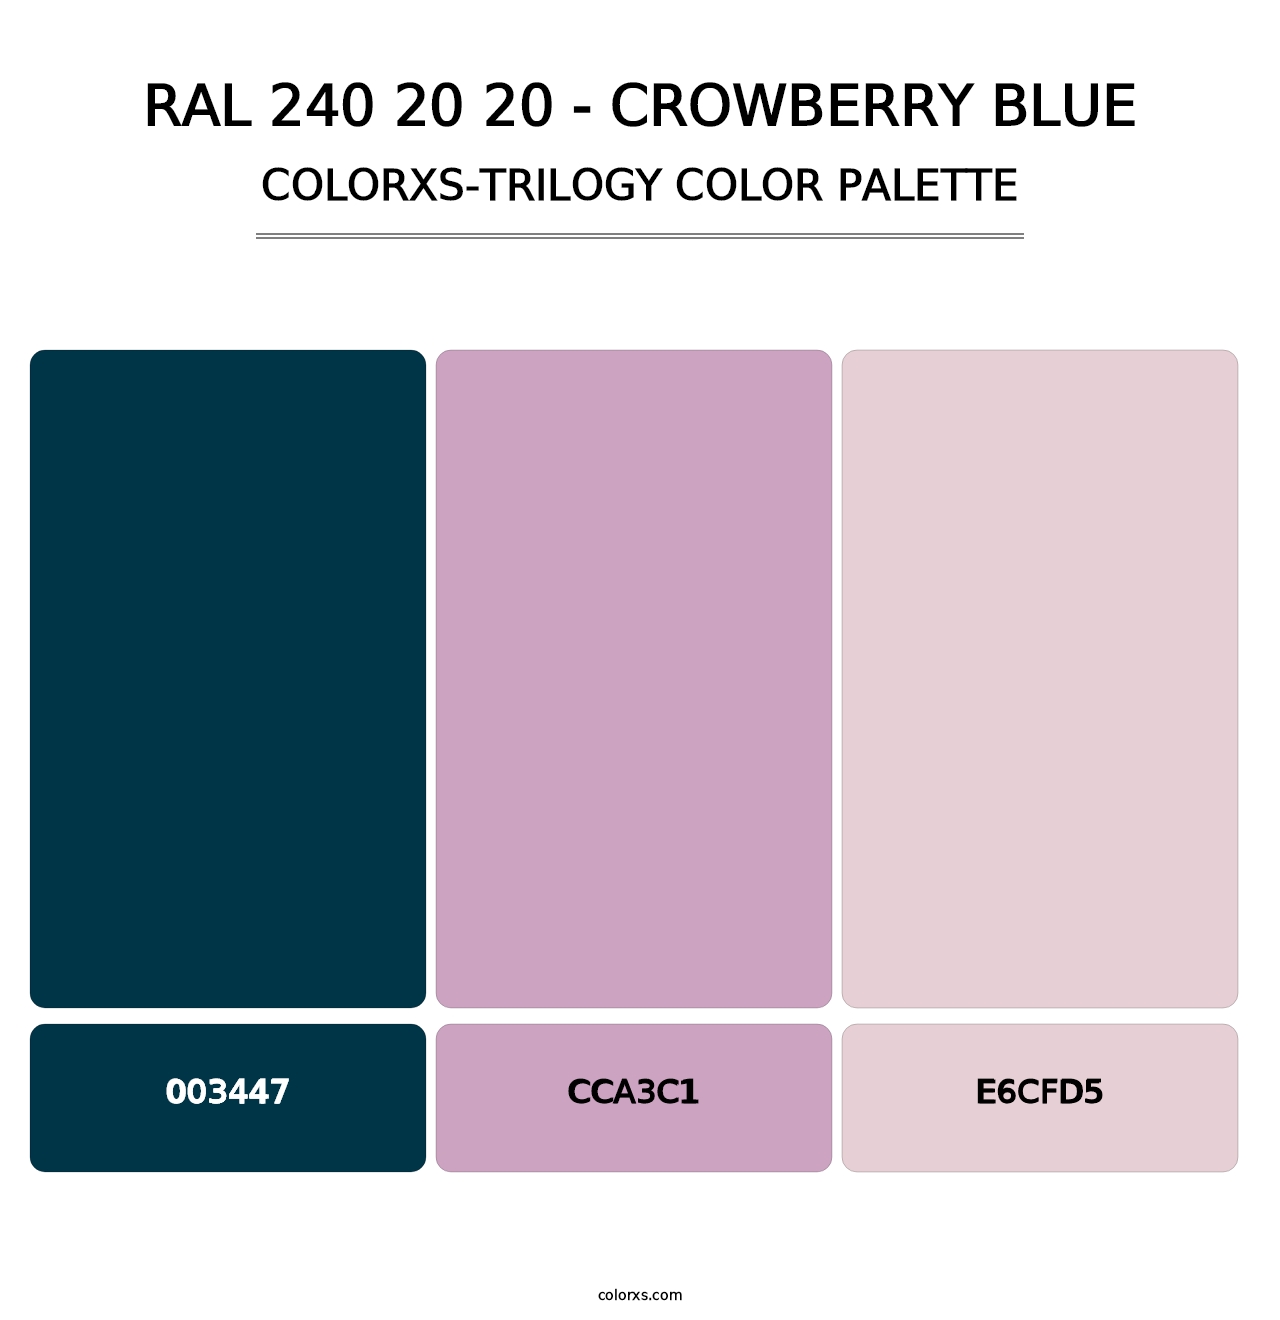 RAL 240 20 20 - Crowberry Blue - Colorxs Trilogy Palette